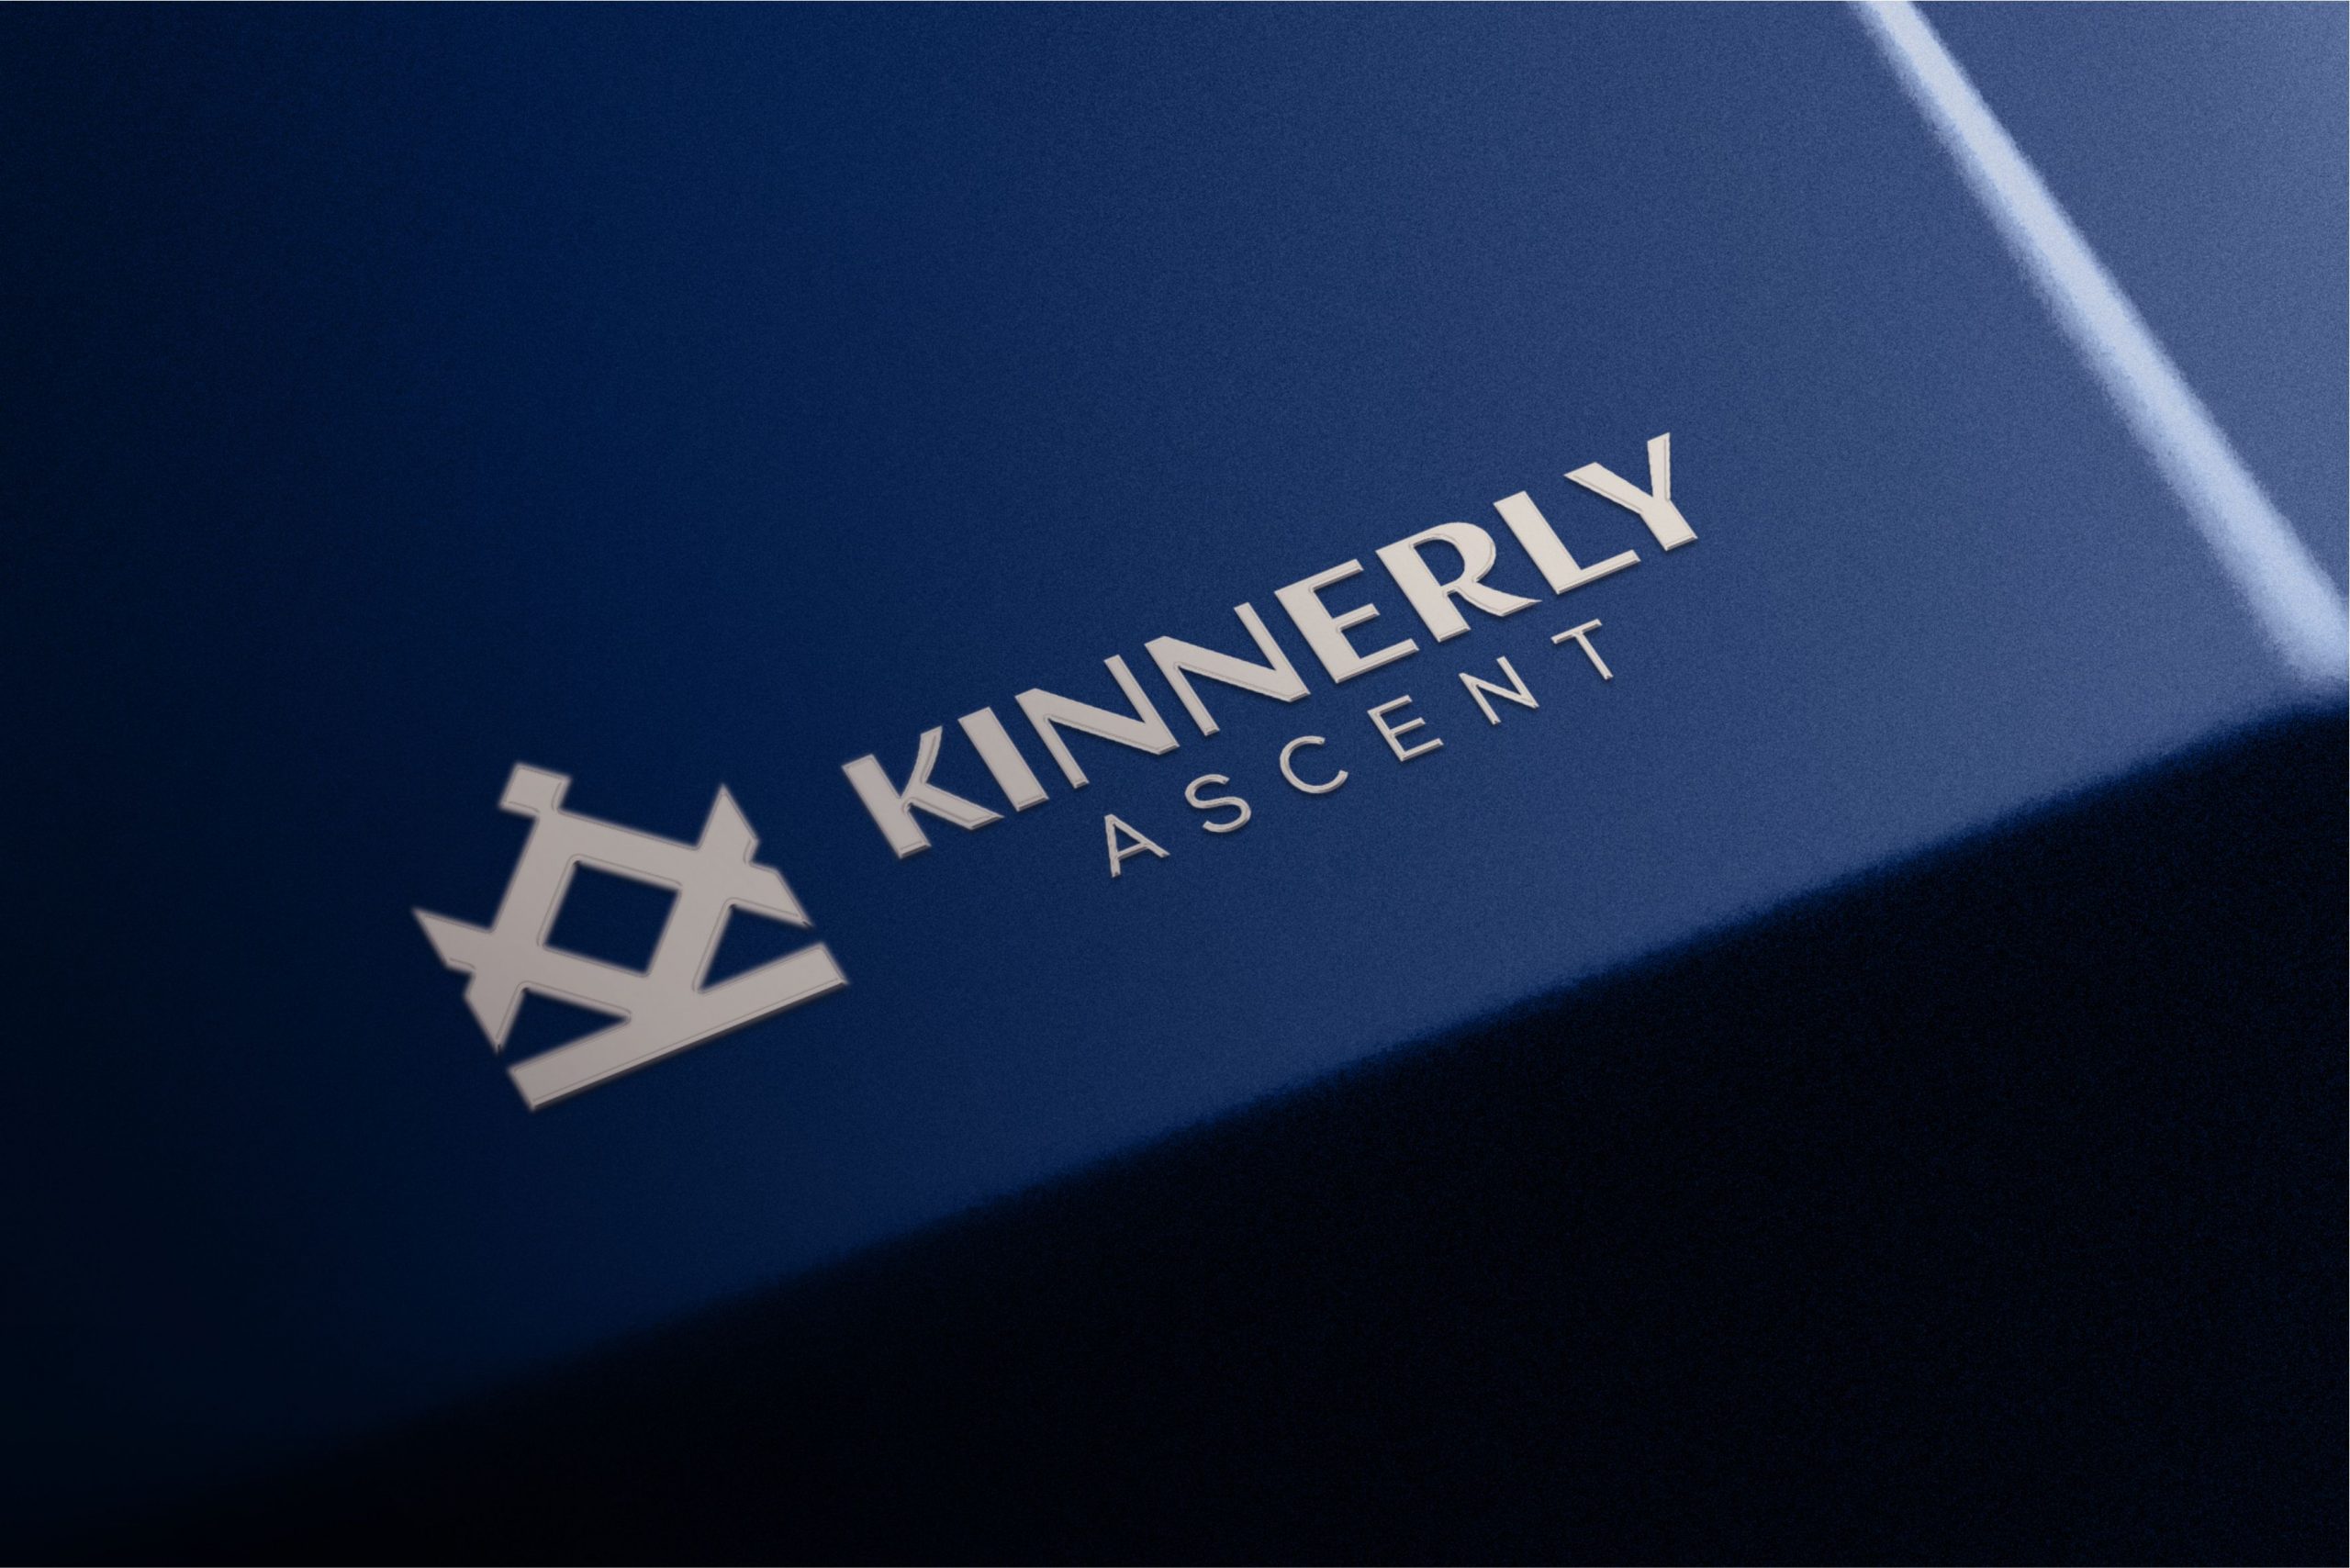 Kinnerly Brand Identity